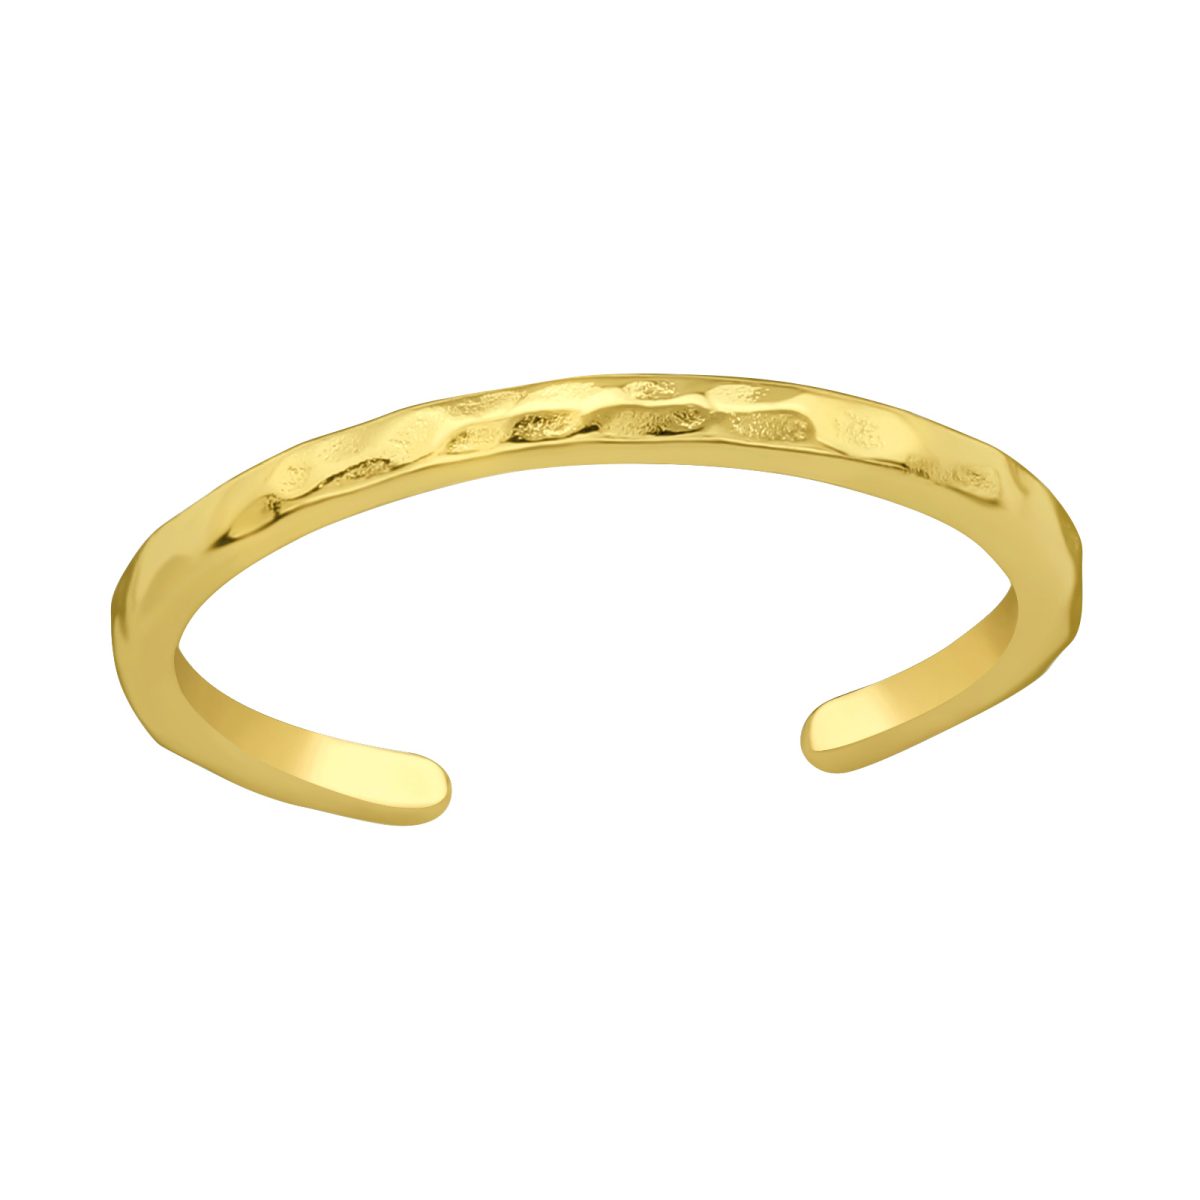 Zilveren gold plated teenring eenvoudig  One size fits all - Toe Ring Adjustable  Zilverana  Sterling 925 Silver (Echt zilver)